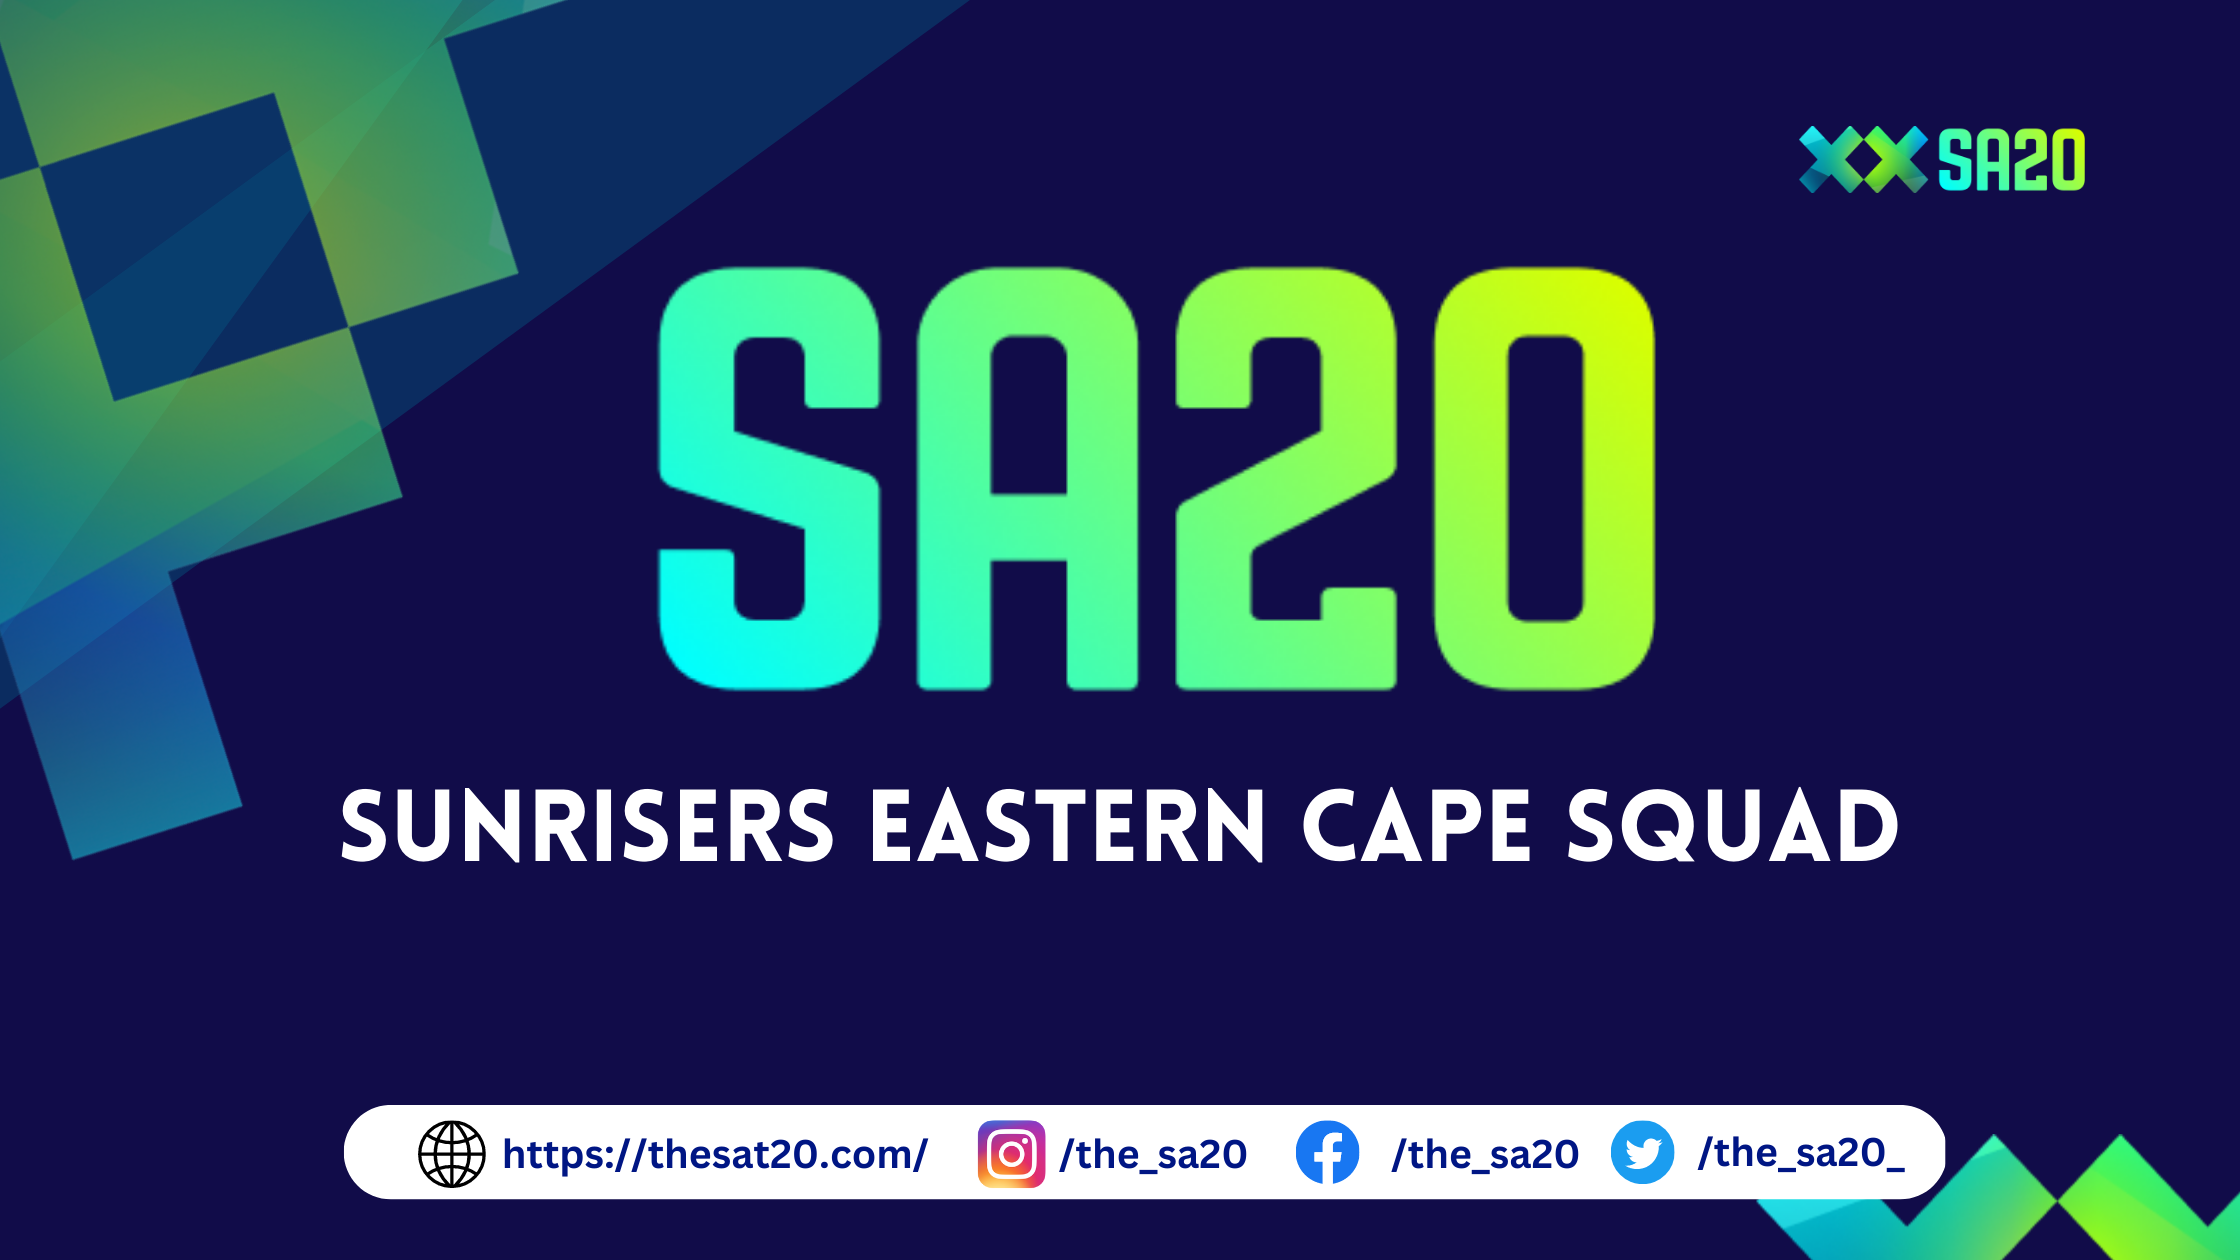 Sunrisers Eastern Cape Squad